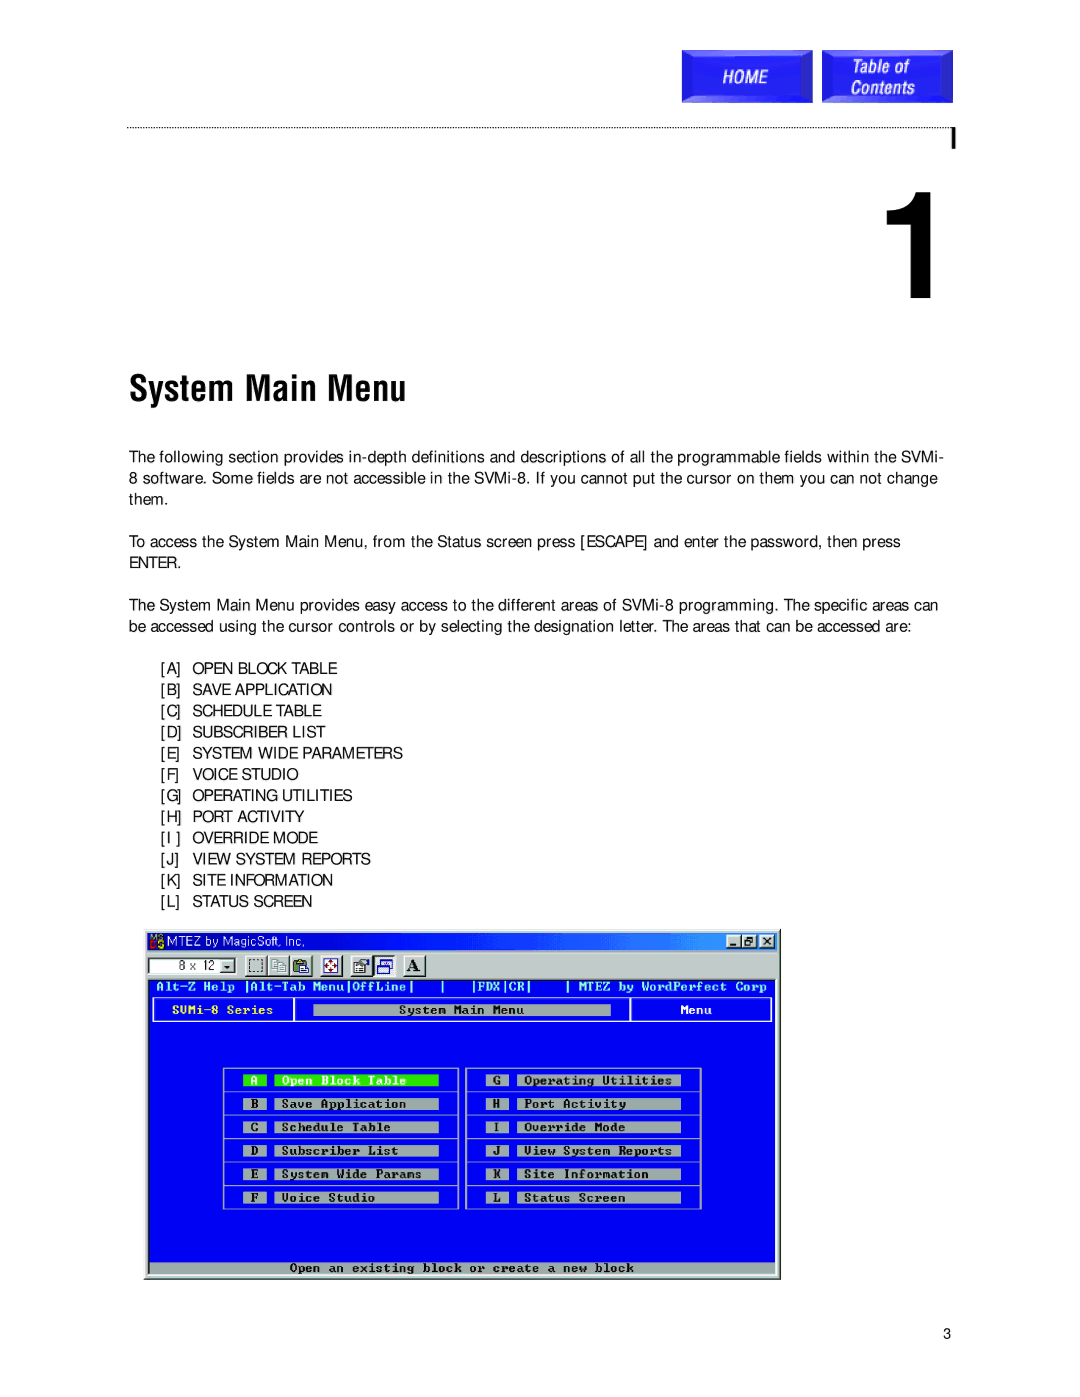 Samsung SVMi-8 technical manual System Main Menu, Enter 